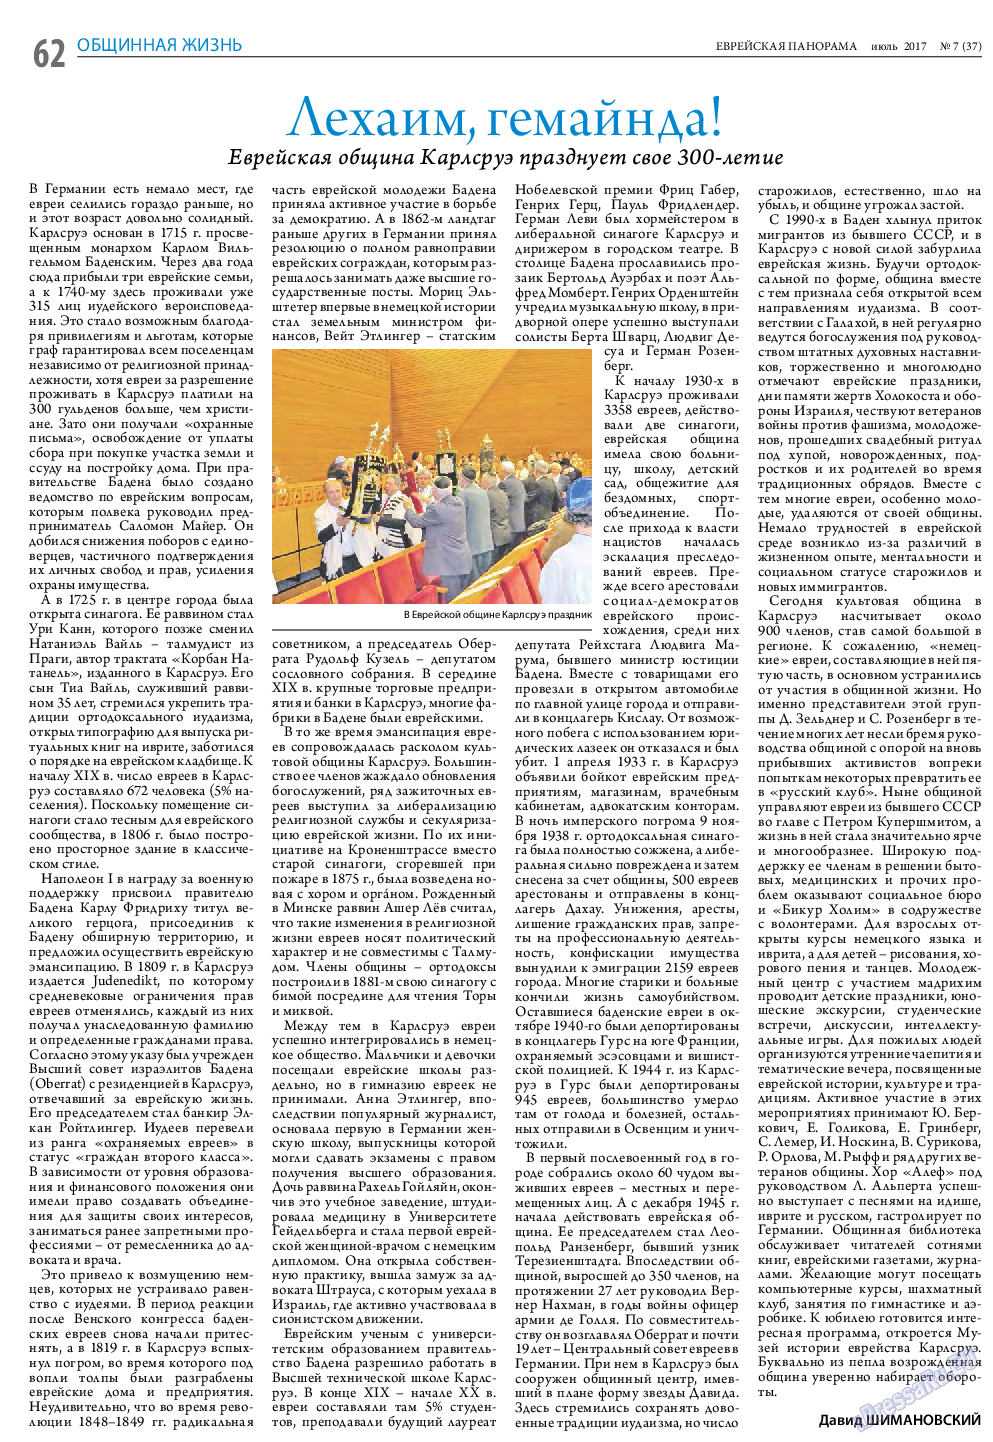 Еврейская панорама, газета. 2017 №7 стр.62